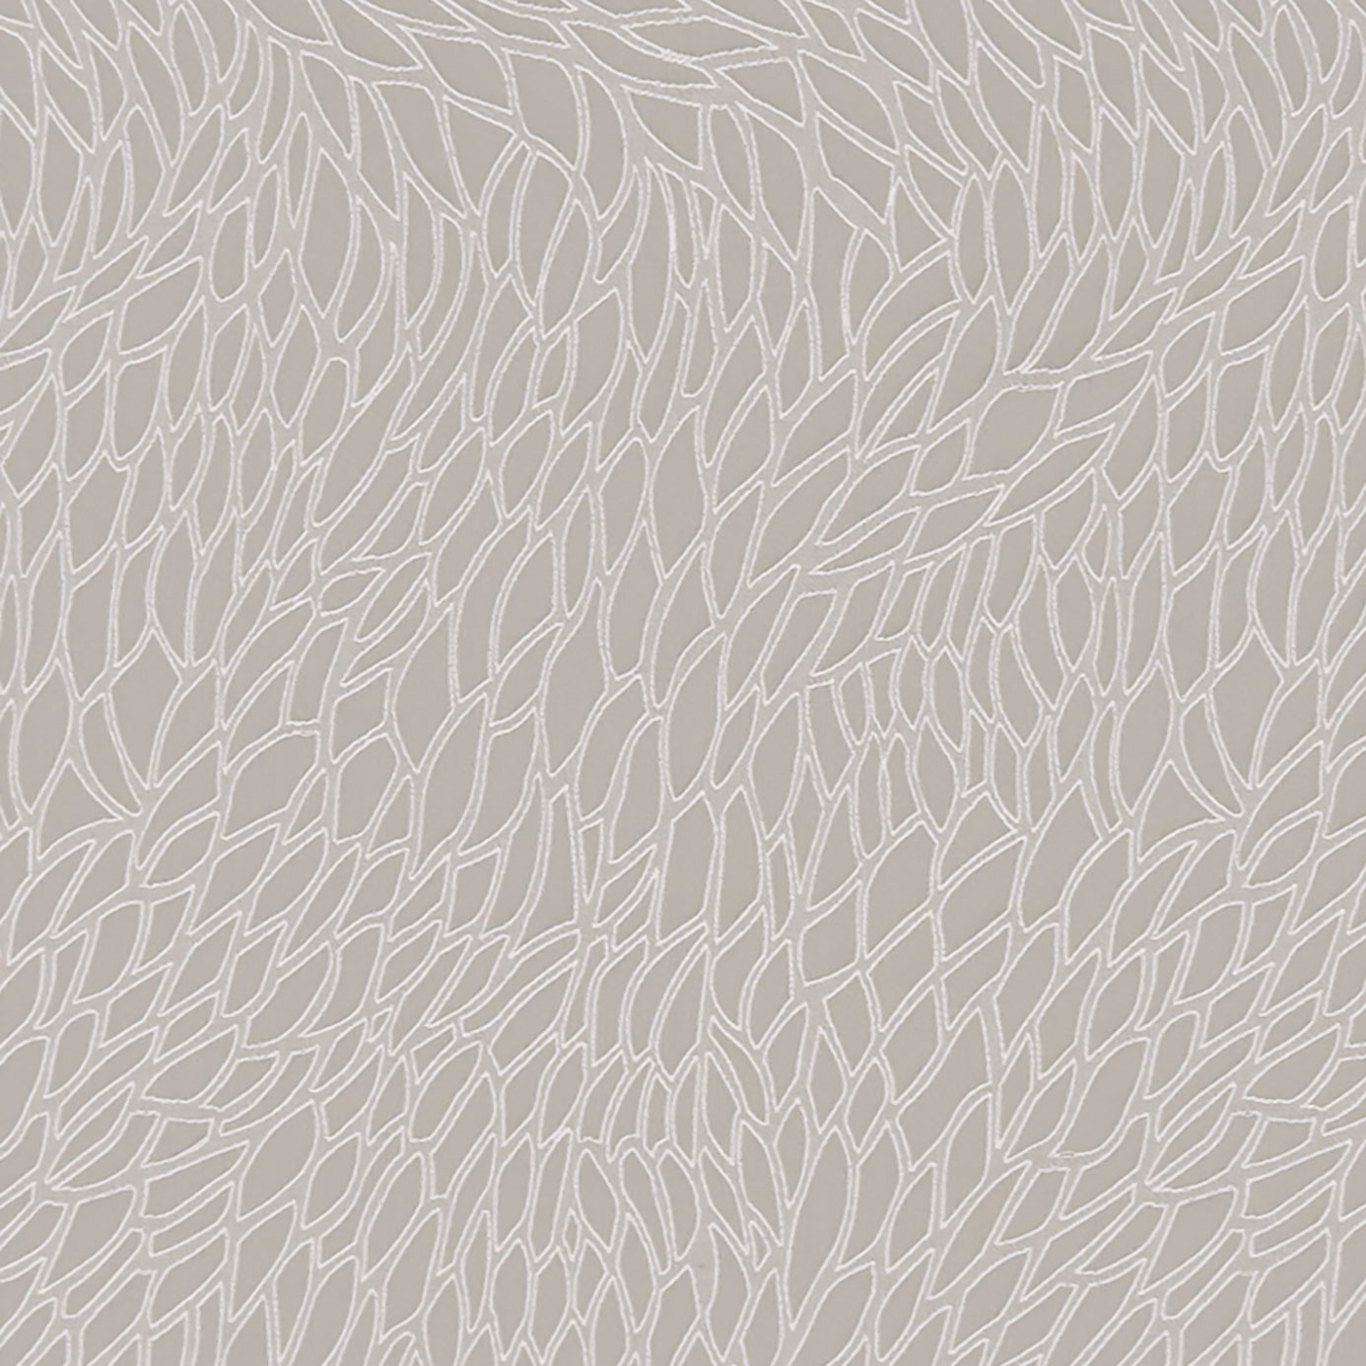 Corallino Fabric by Clarke & Clarke - F1246/06 - Pebble